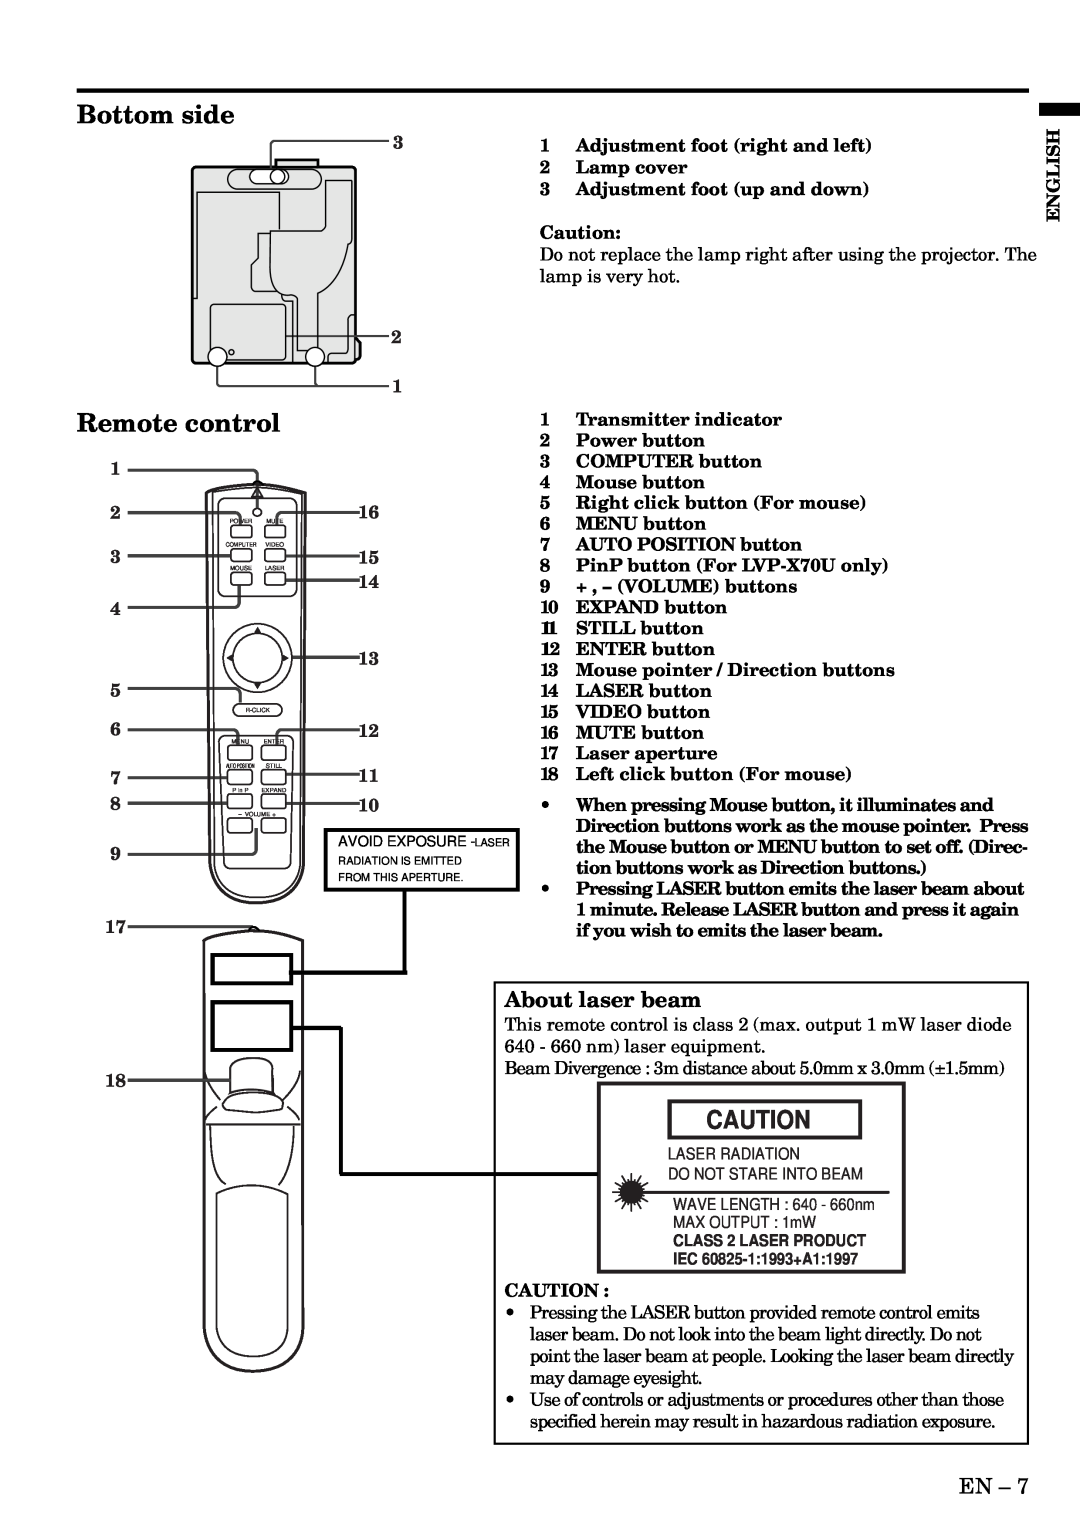 Mitsubishi Electronics X70U user manual Bottom side, Remote control, About laser beam 